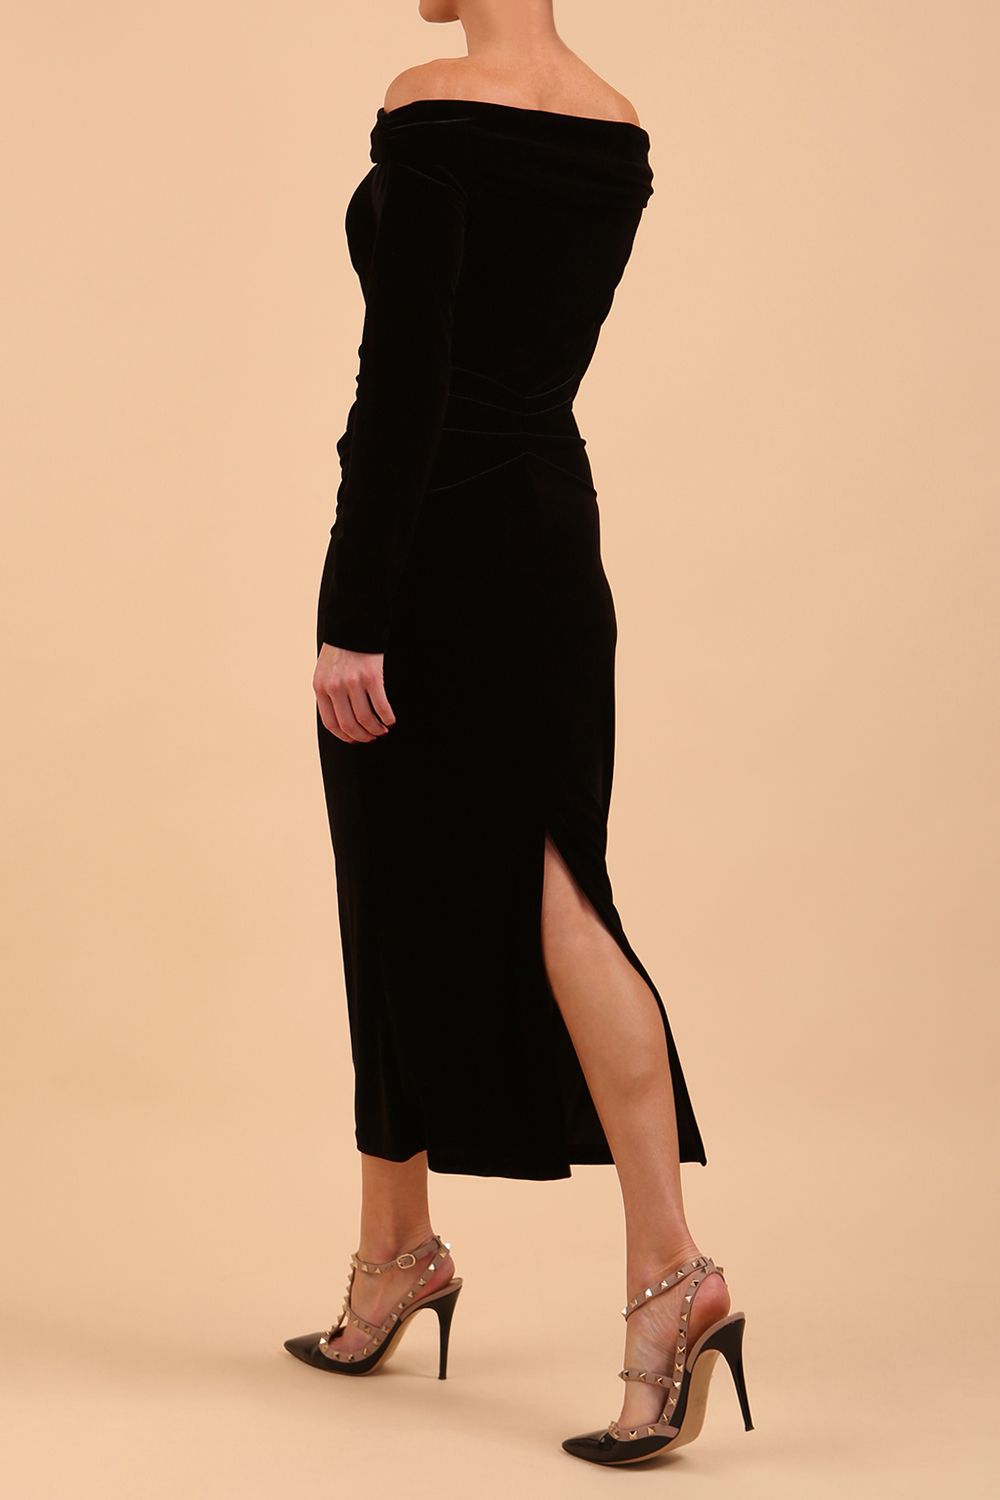 A Model is wearing an off shoulder bardot neckline velvet stretch midi dress in black by diva catwalk back